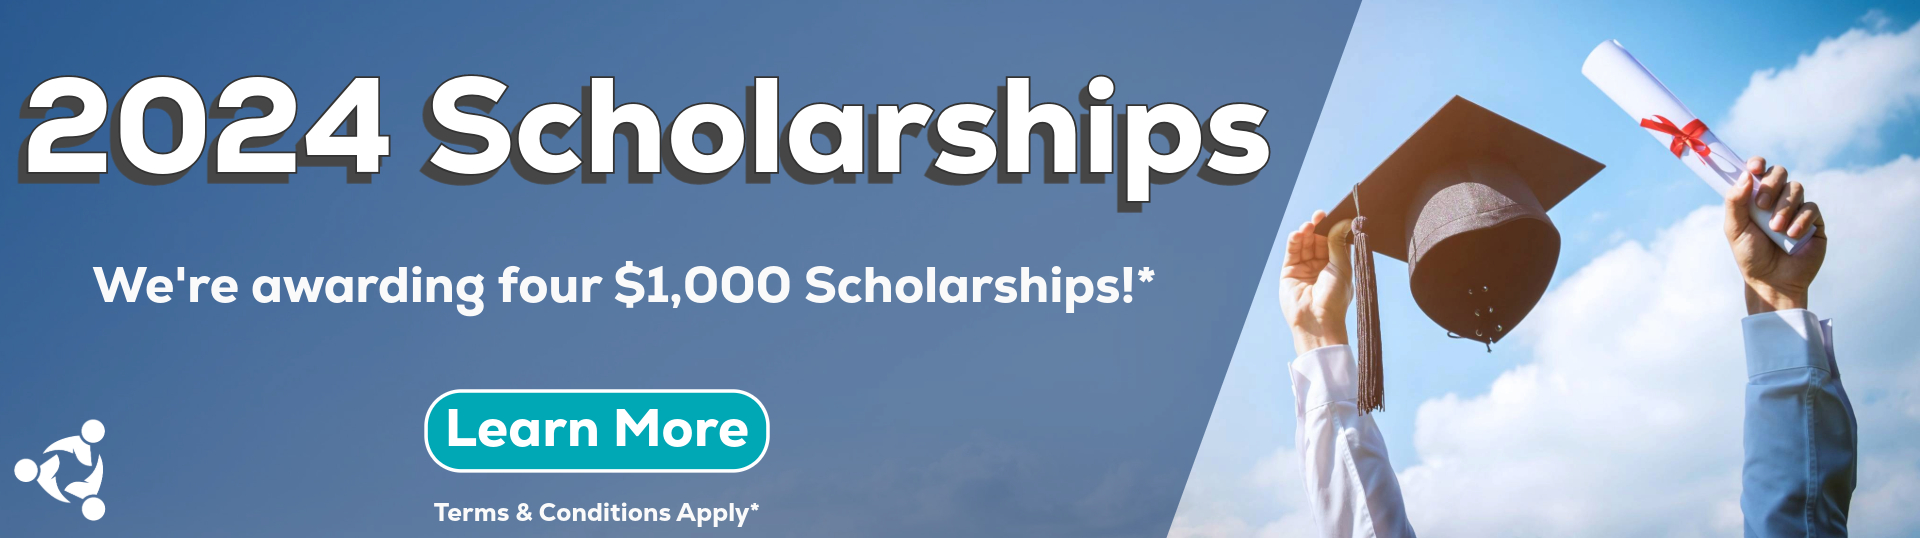 Scholarship Web banner 2024 - button